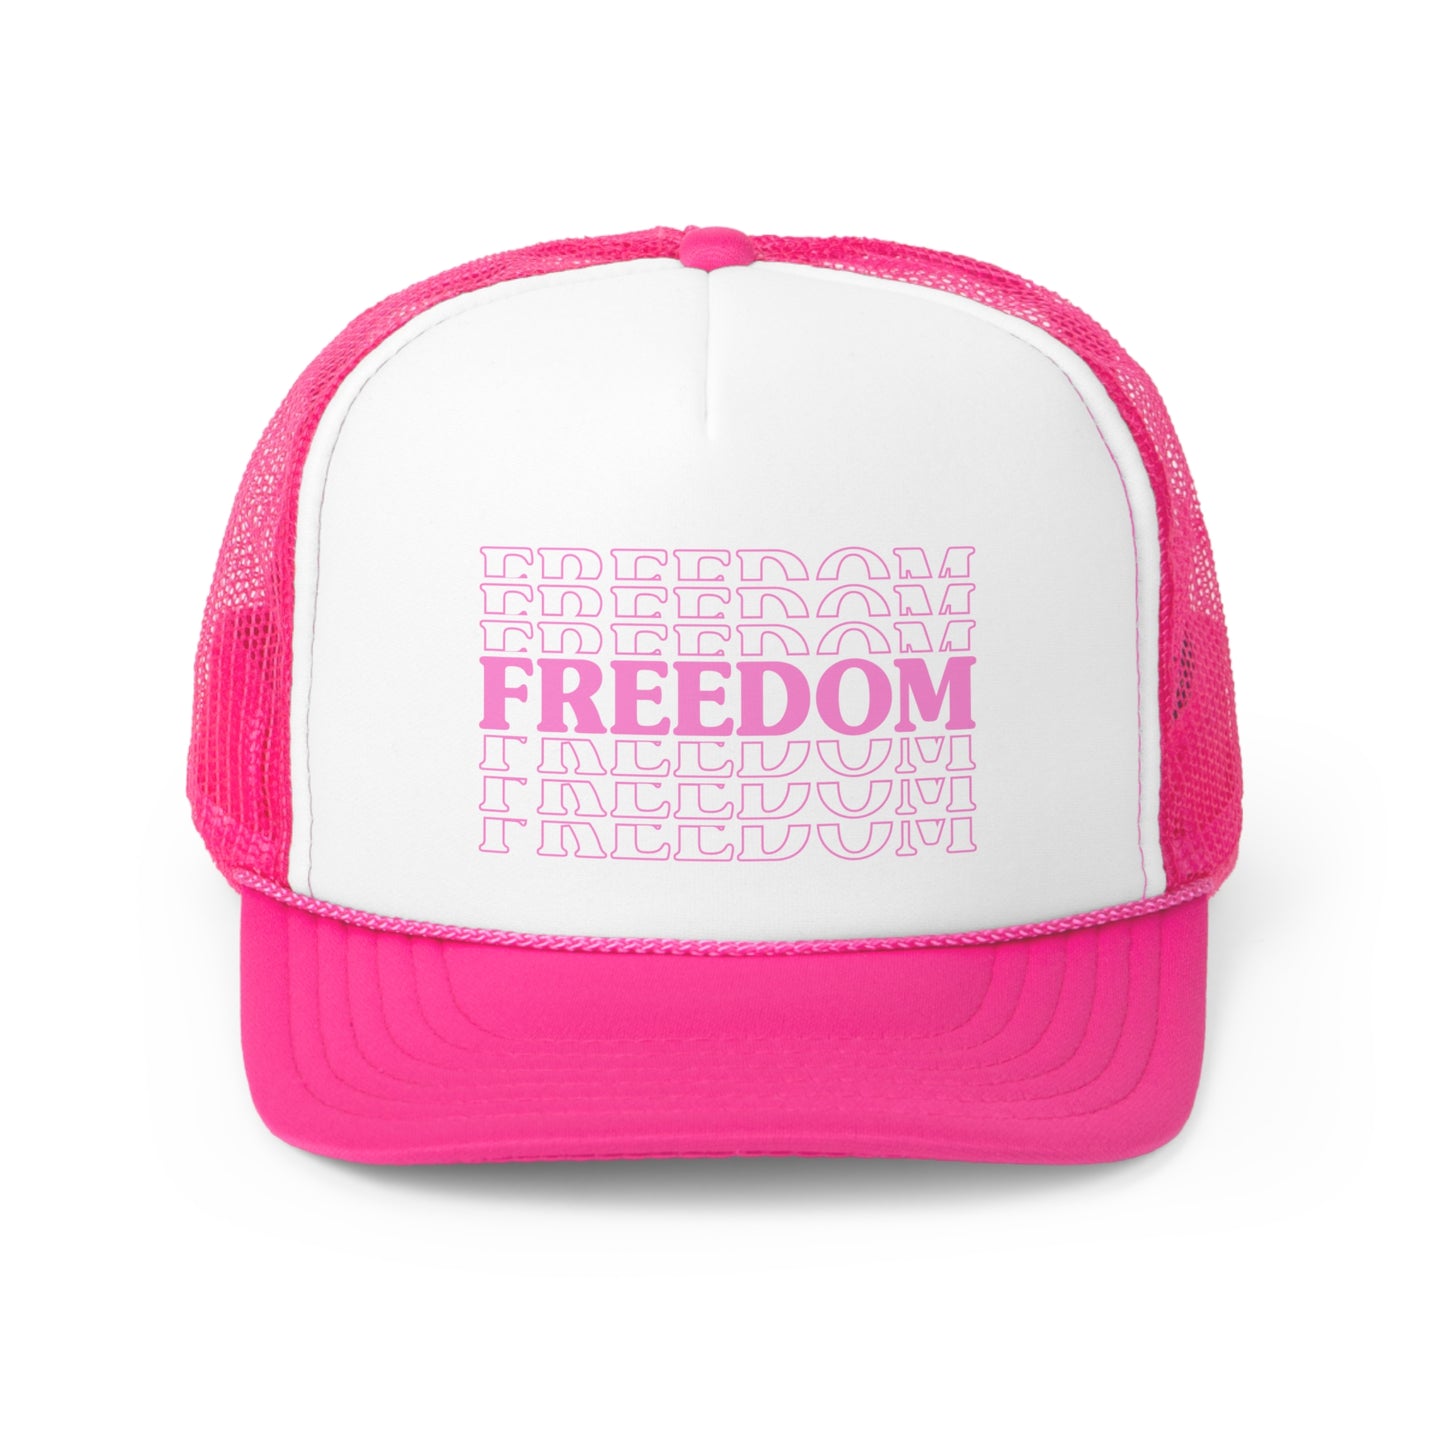 USA FREEDOM Pink Trucker Caps